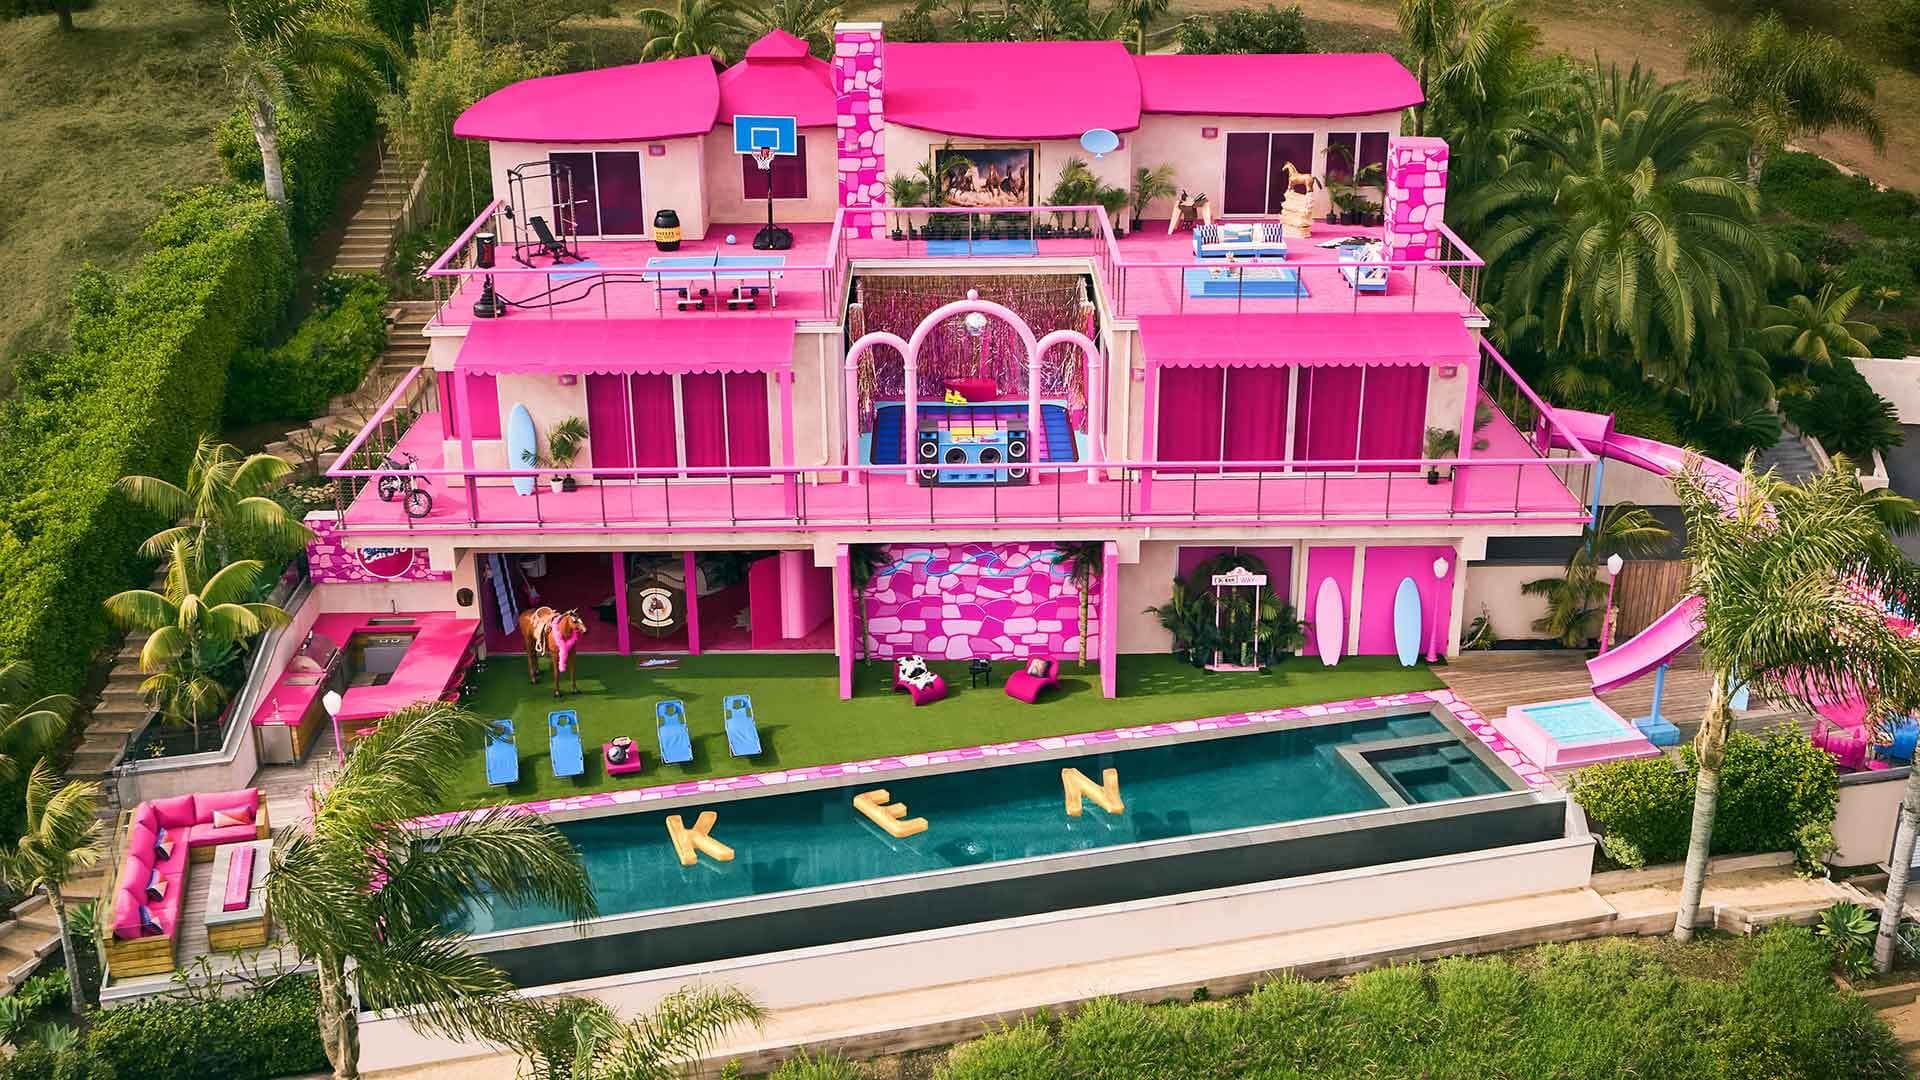 Barbie's dream house